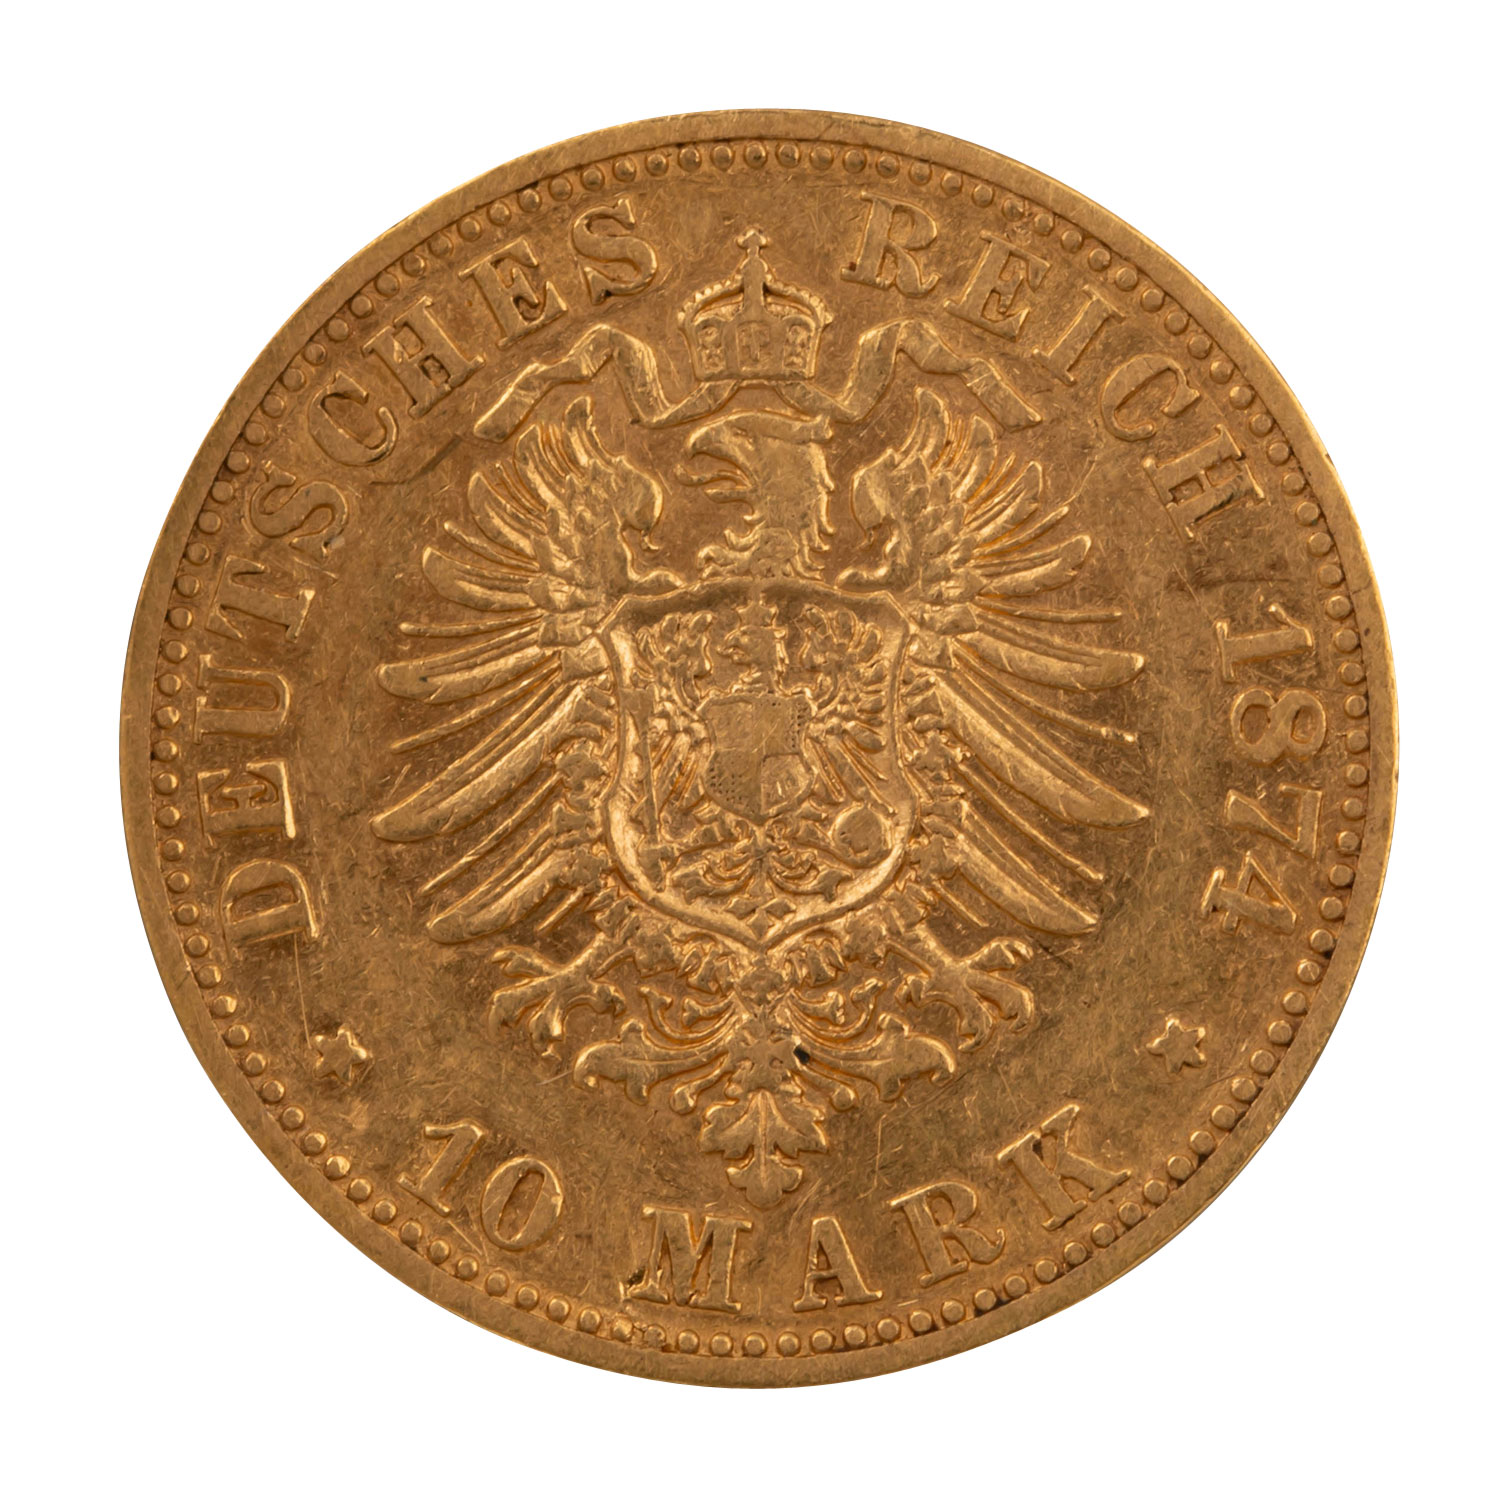 Großherzogtum Oldenburg/Gold - 10 Mark 1874/B, - Image 2 of 2